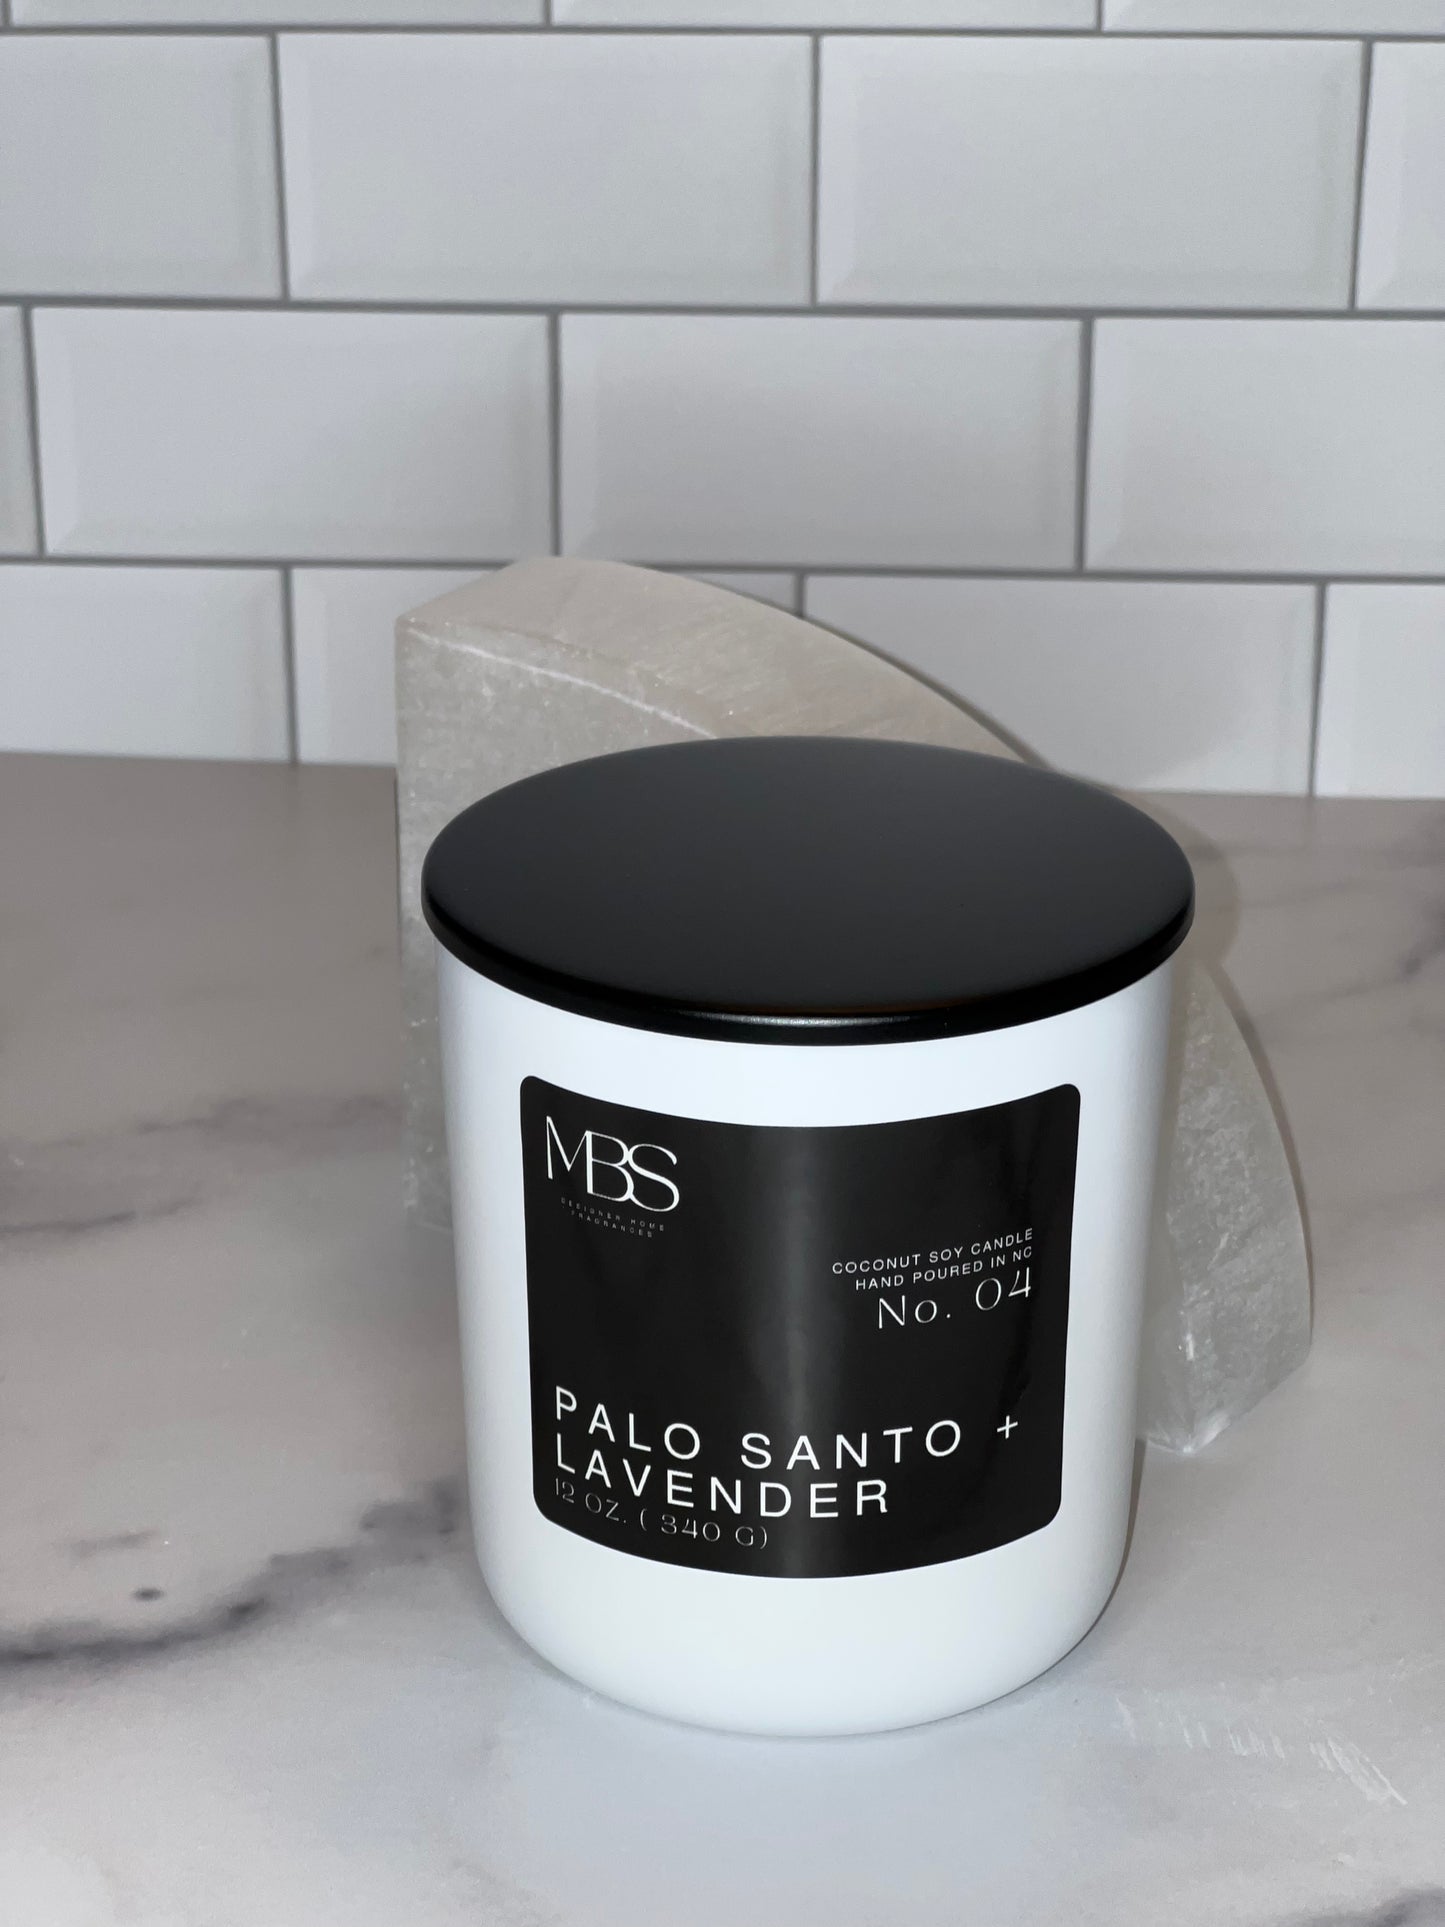 Palo Santo + Lavender | No. 04 Candle - Mind Body & Scents, LLC